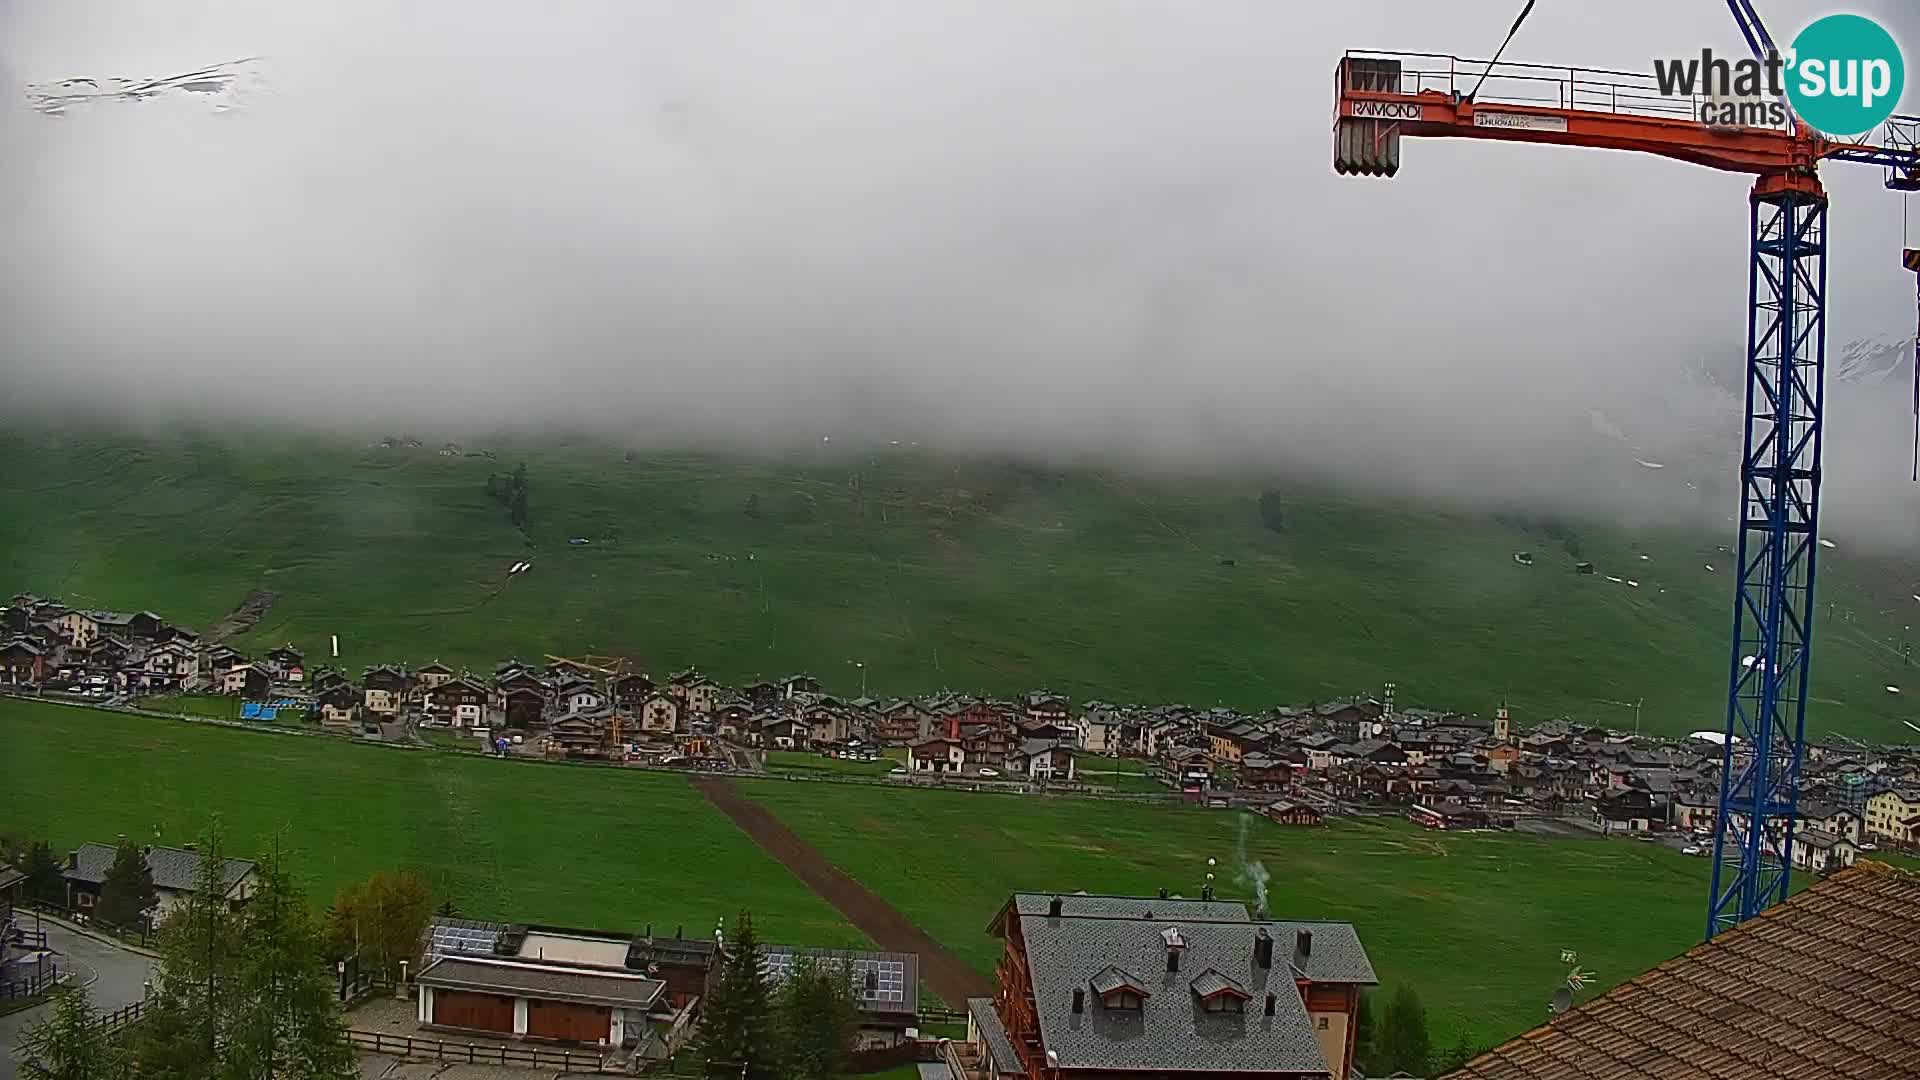 Superbe web camera Livigno, vue panoramique depuis l’hôtel Teola